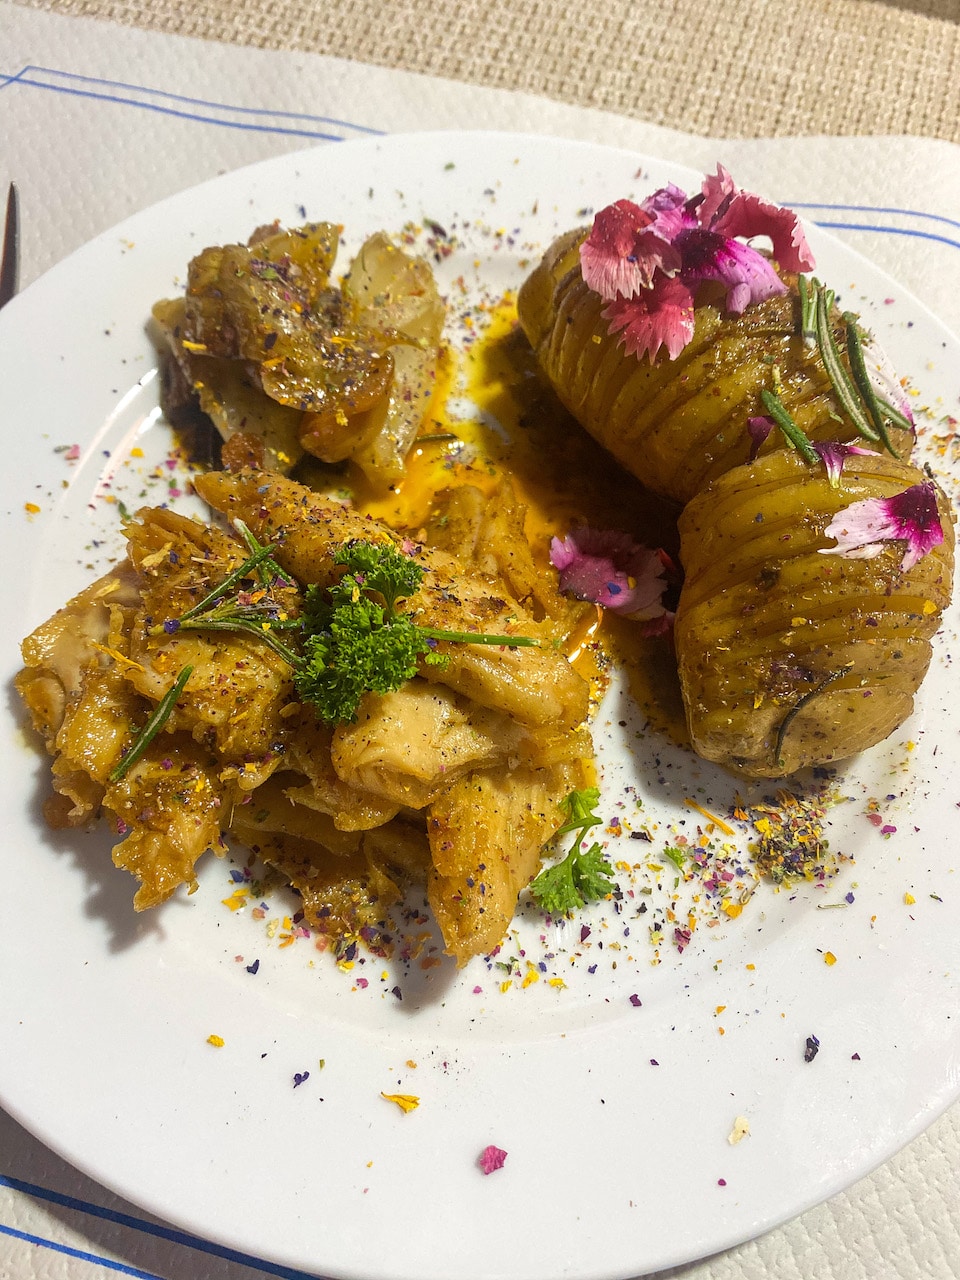 El Invernadero - beste vegan restaurant op Fuerteventura  - menu